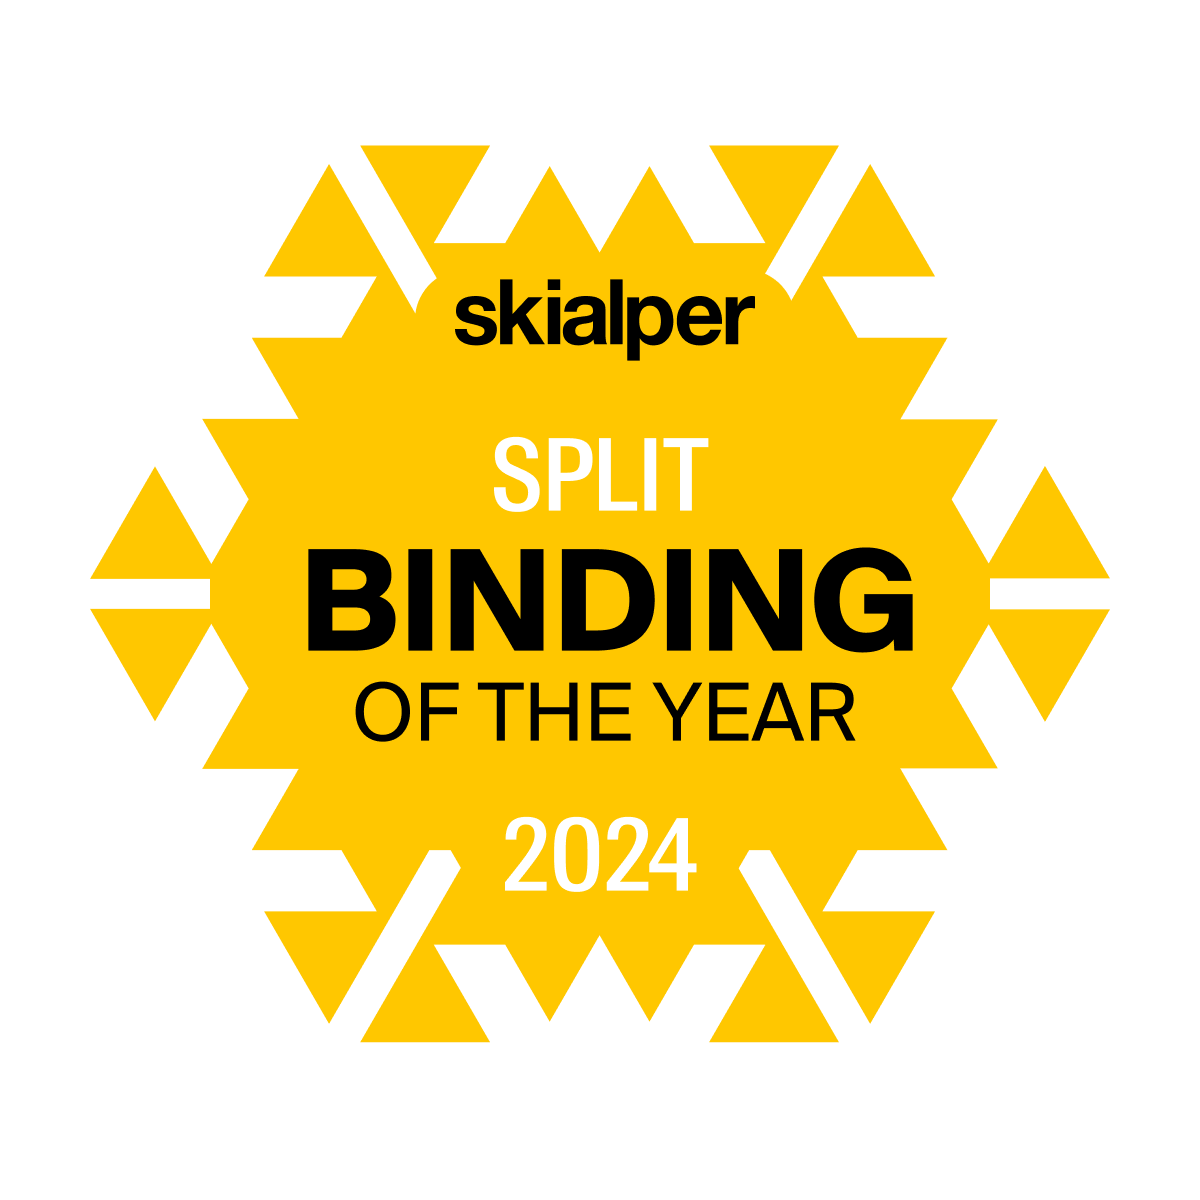 Binding of the Year Split